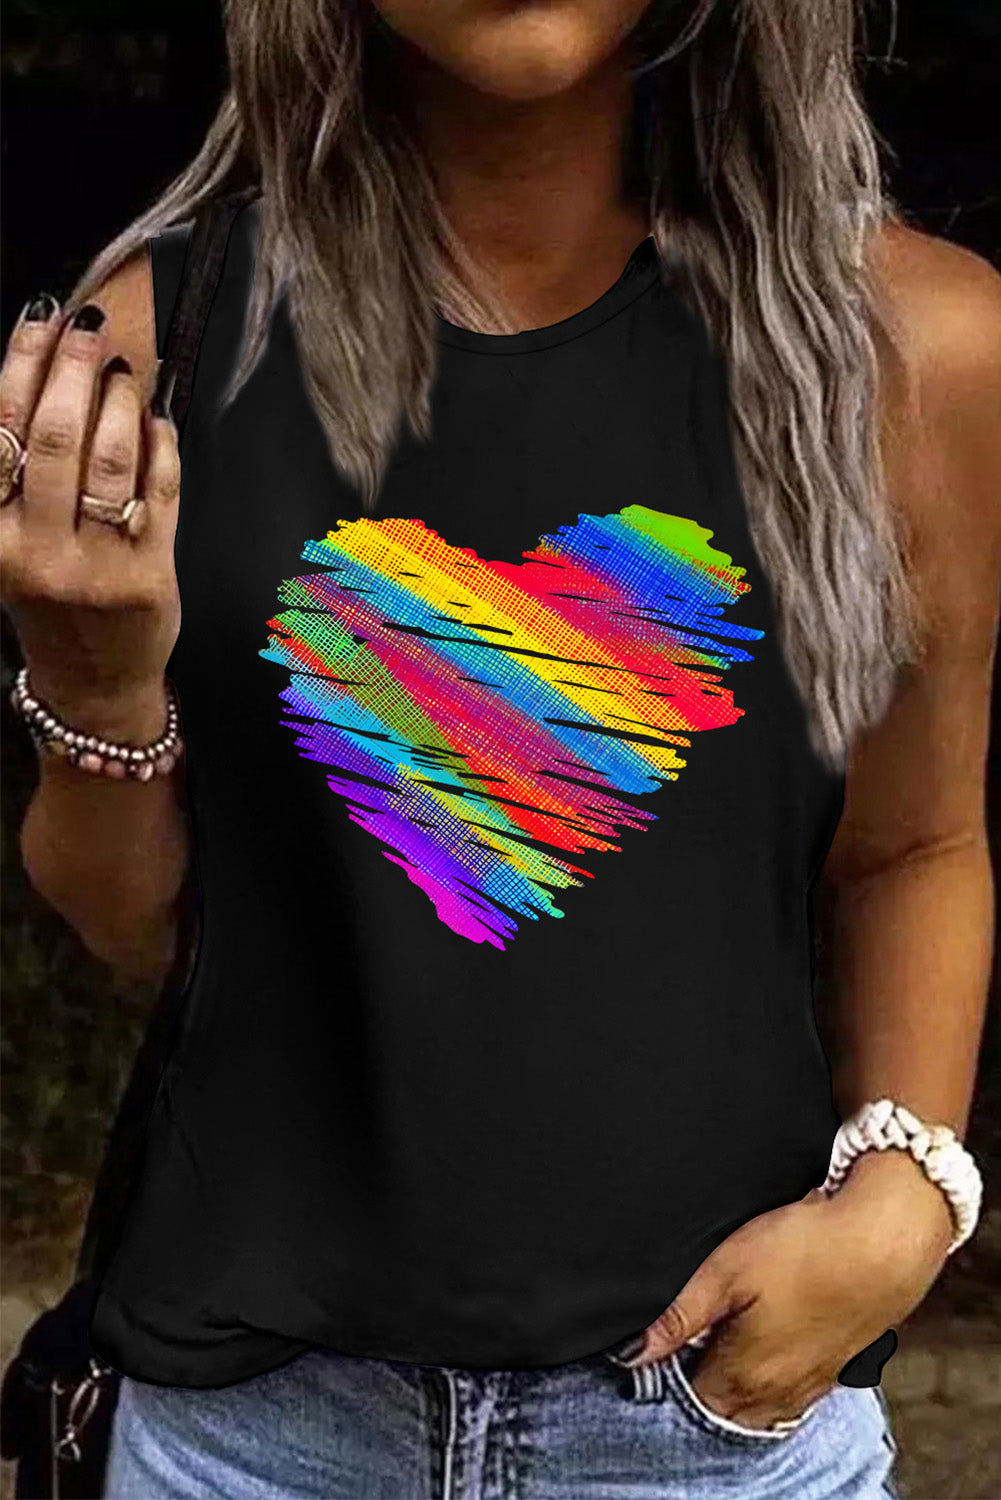 LC2569550-2-S, LC2569550-2-M, LC2569550-2-L, LC2569550-2-XL, LC2569550-2-2XL, Black Womens Sleeveless Shirt Gay Pride Rainbow Heart Print Casual Tank Top